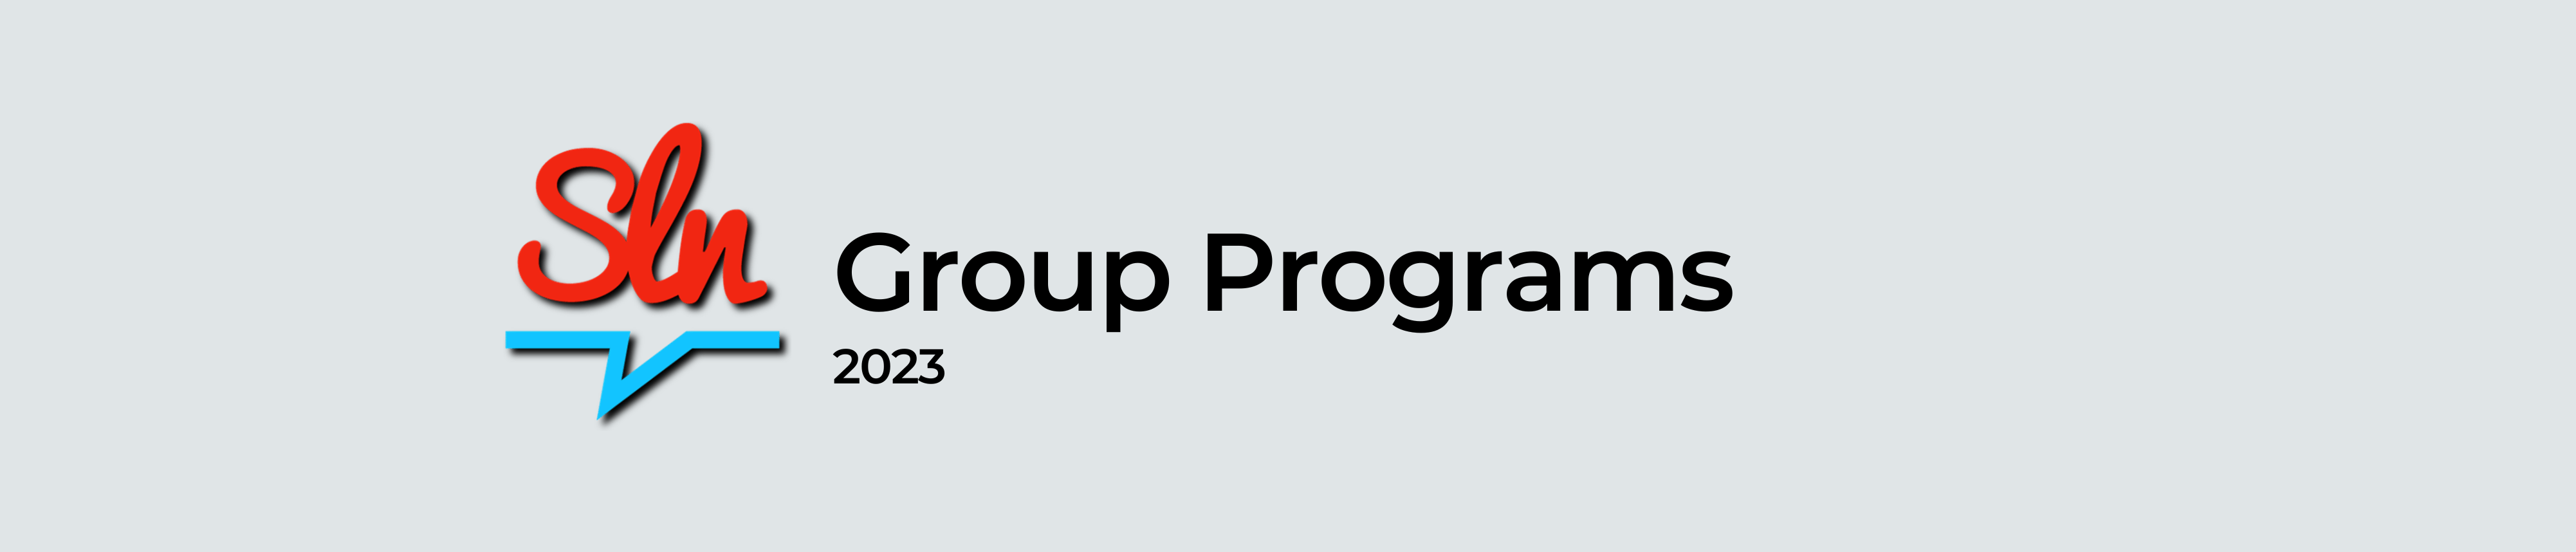 SLN - Group Programs 2023